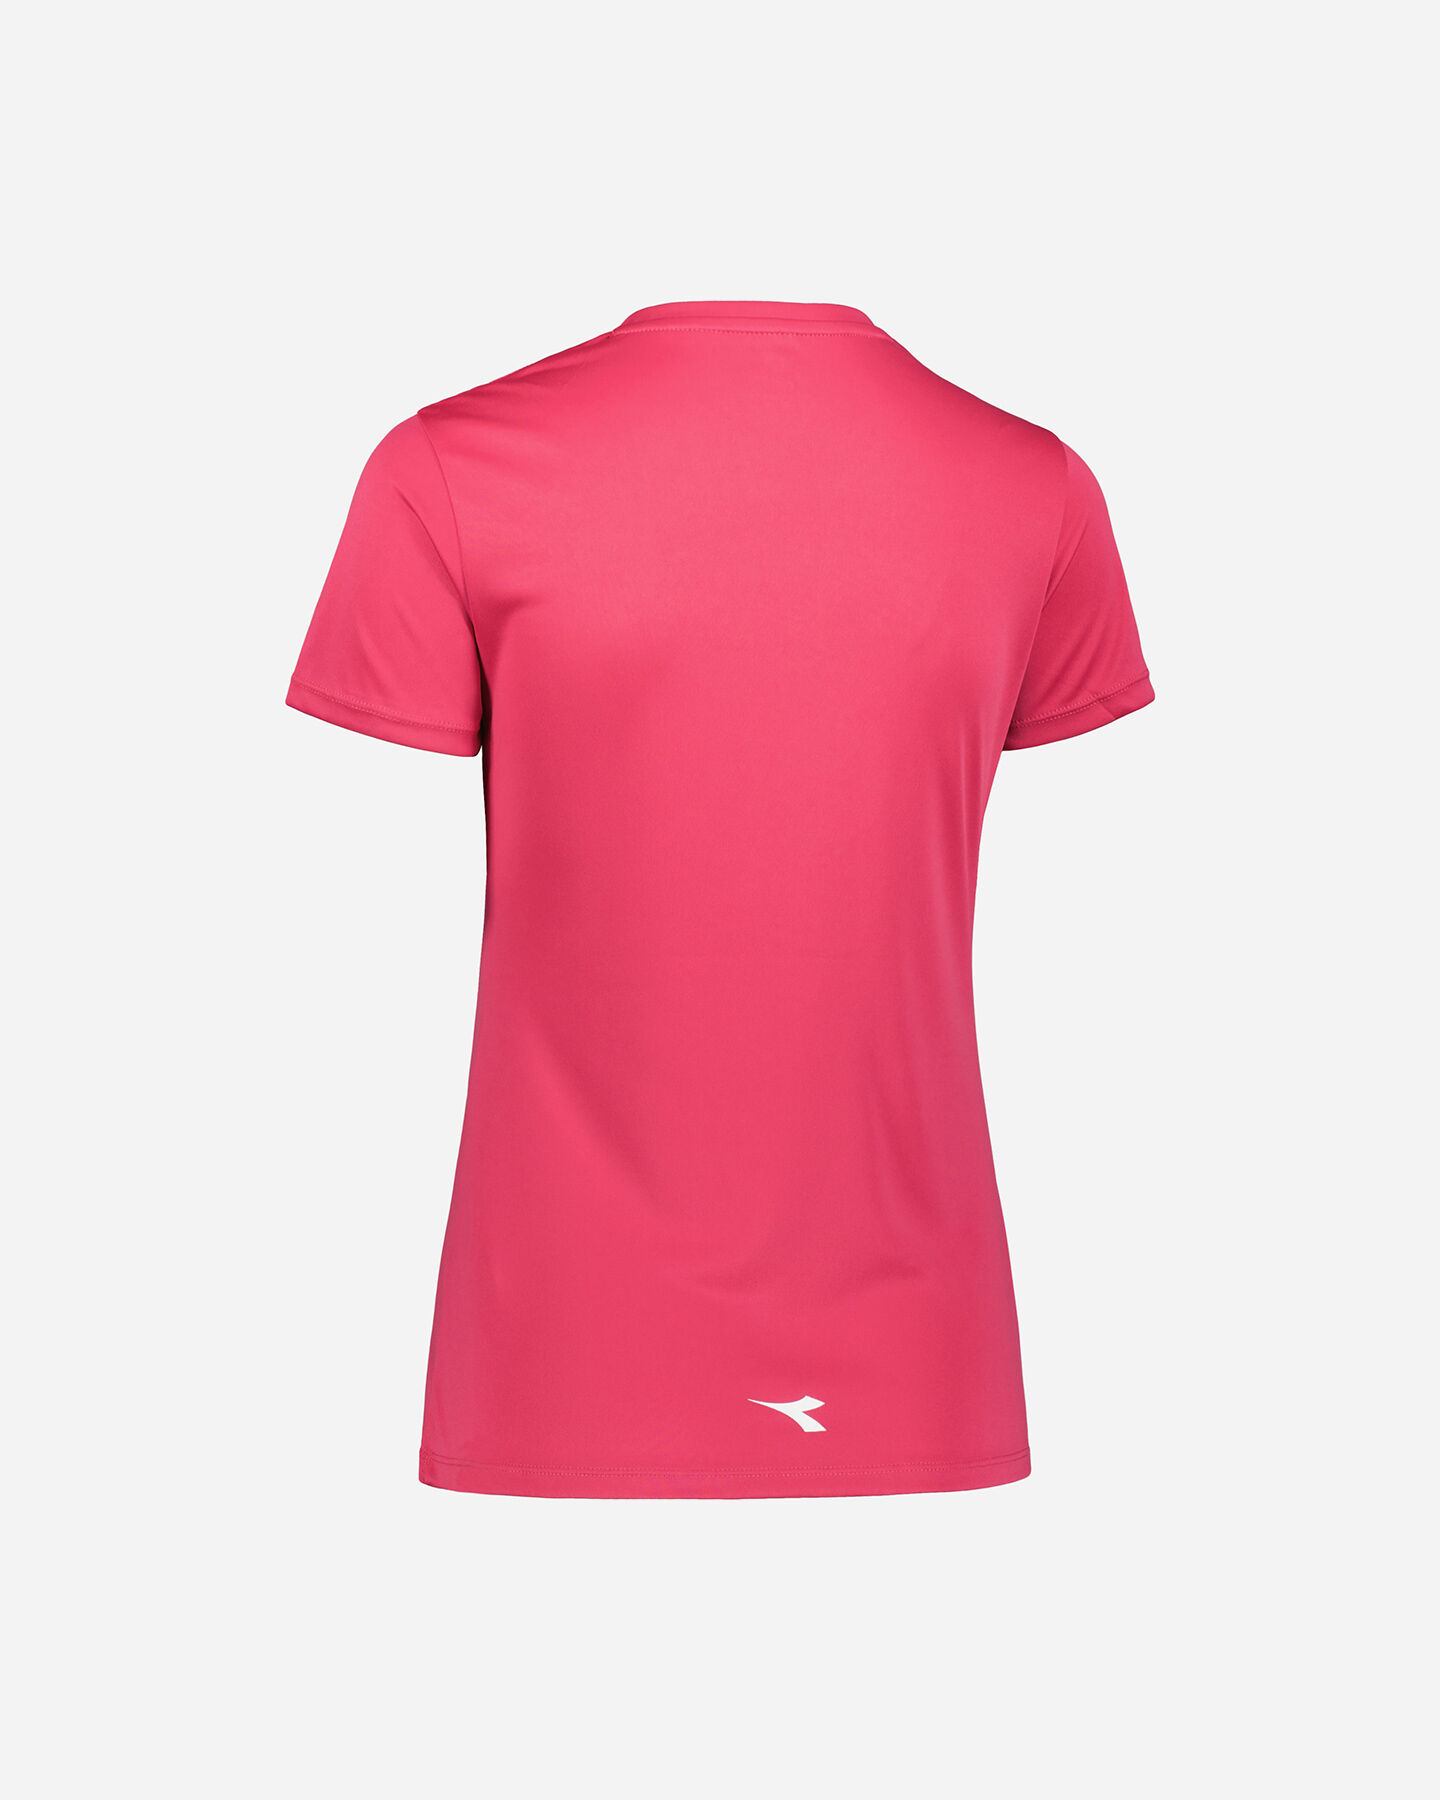  T-Shirt tennis DIADORA CORE W S5401030|50157|XS scatto 1